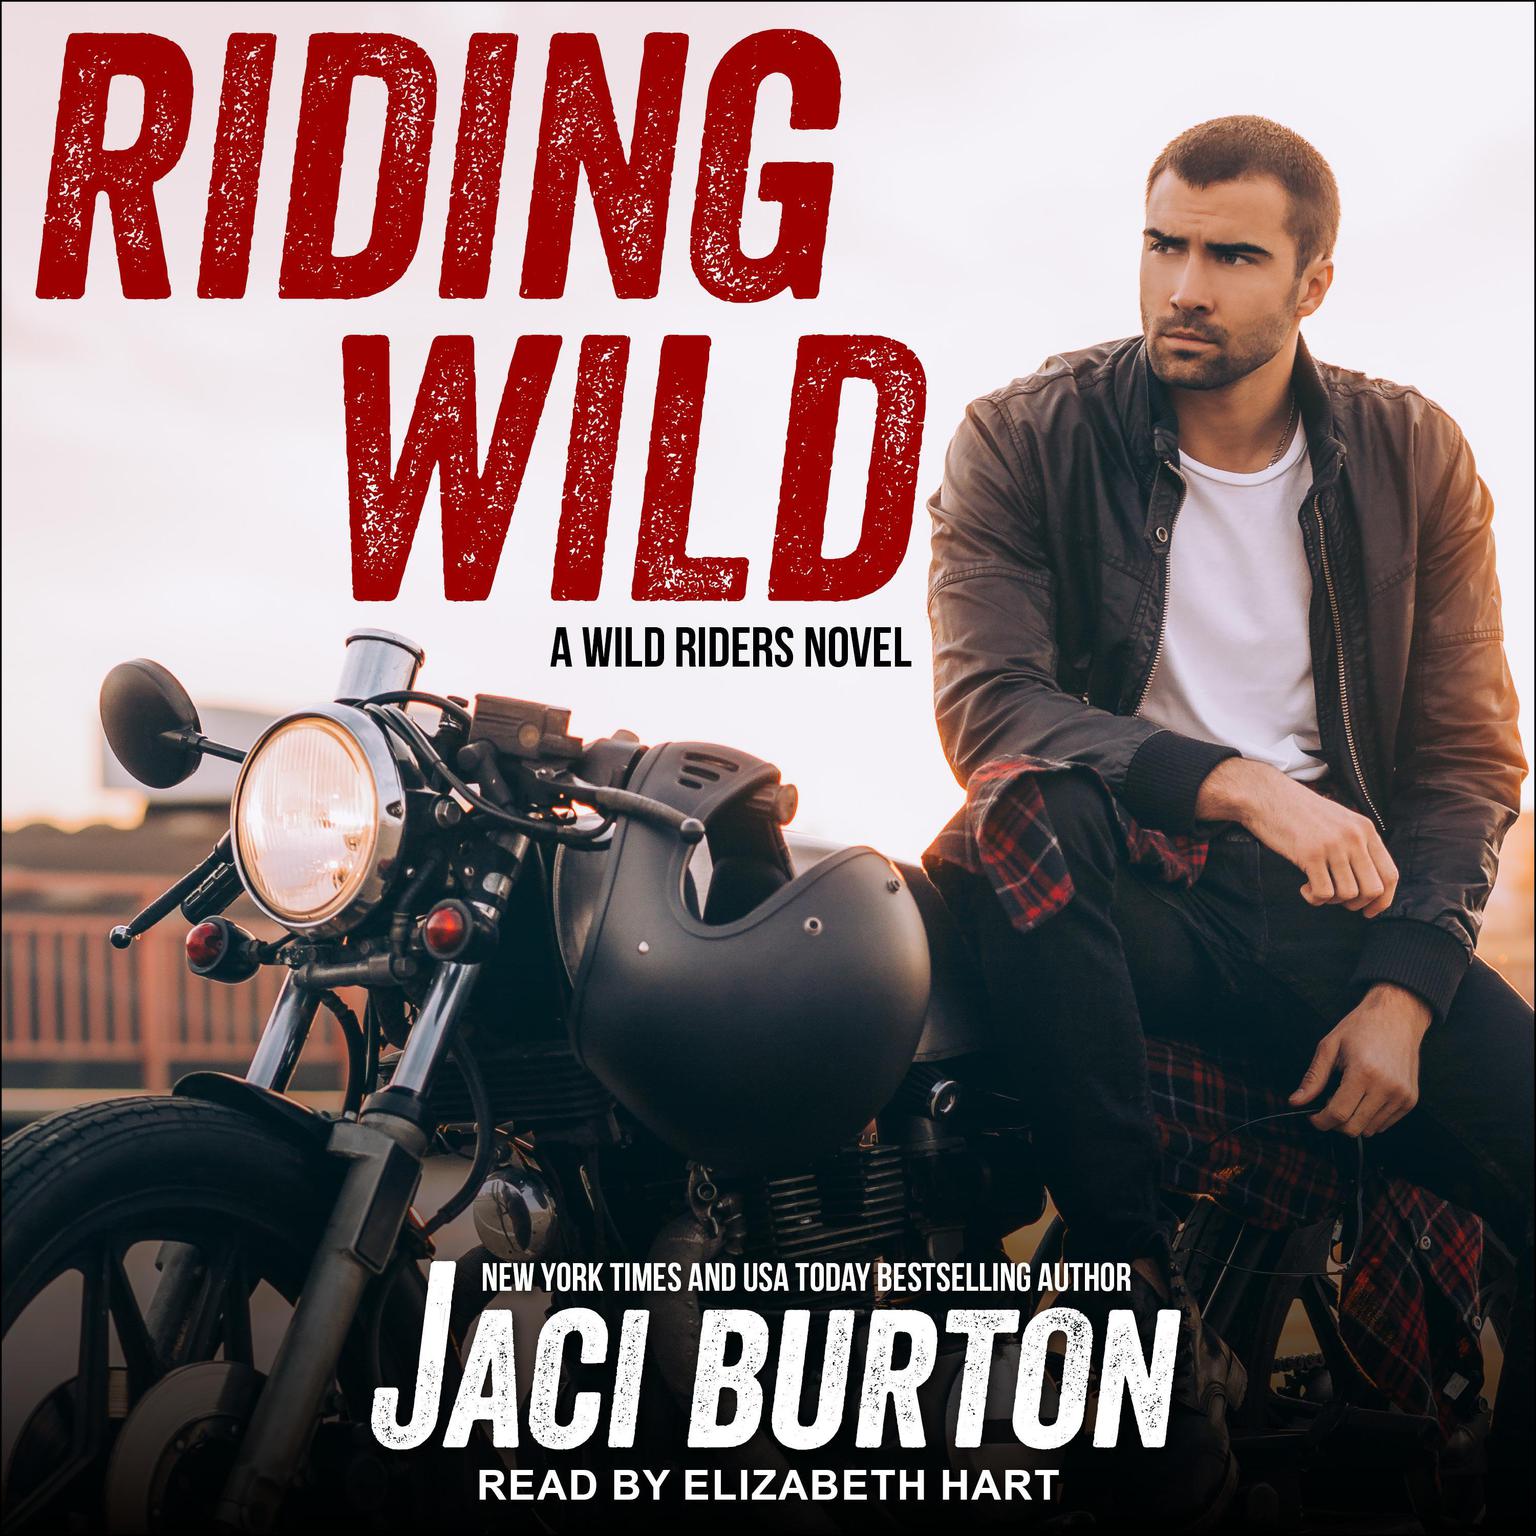 Riding Wild Audiobook, by Jaci Burton